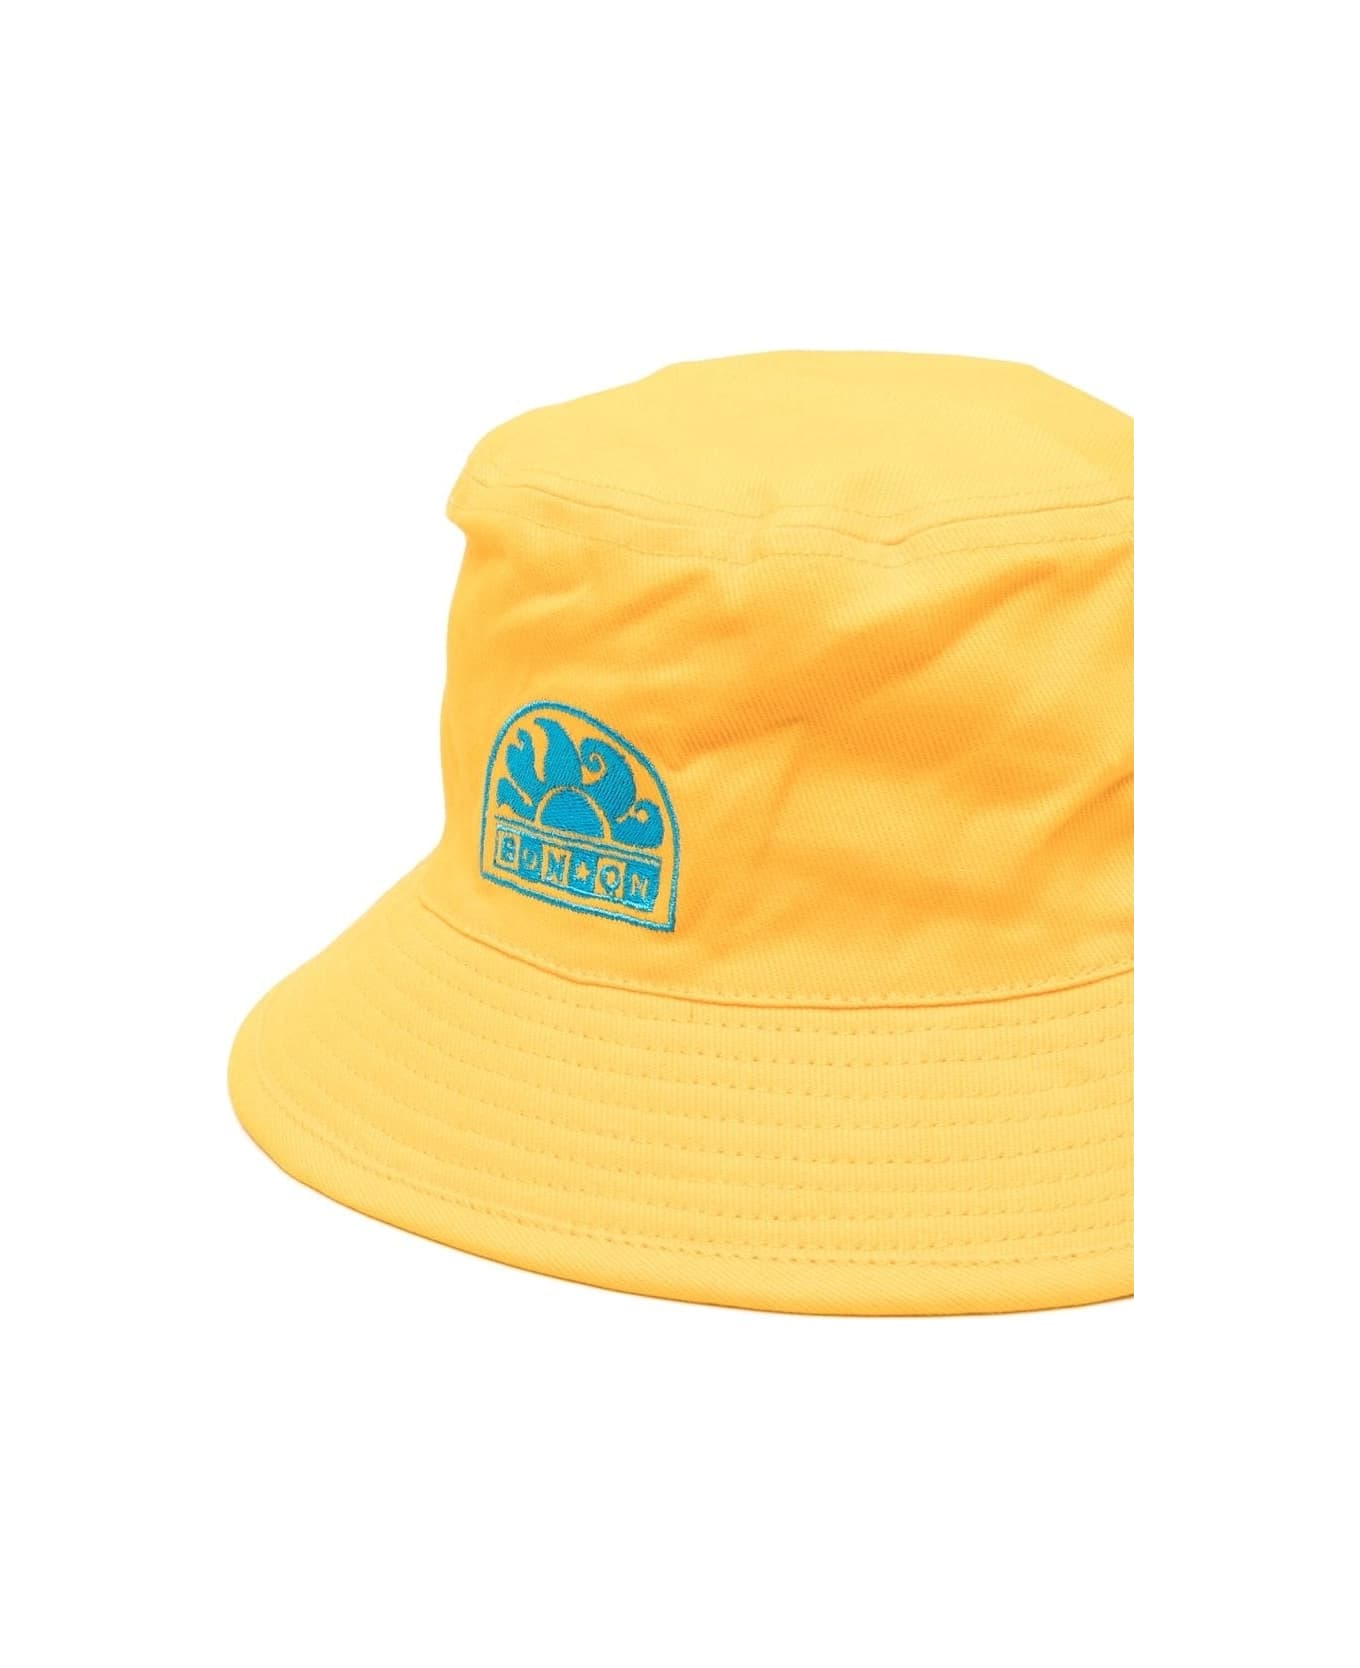 Bonton Embroidered Fisherman Hat - Yellow